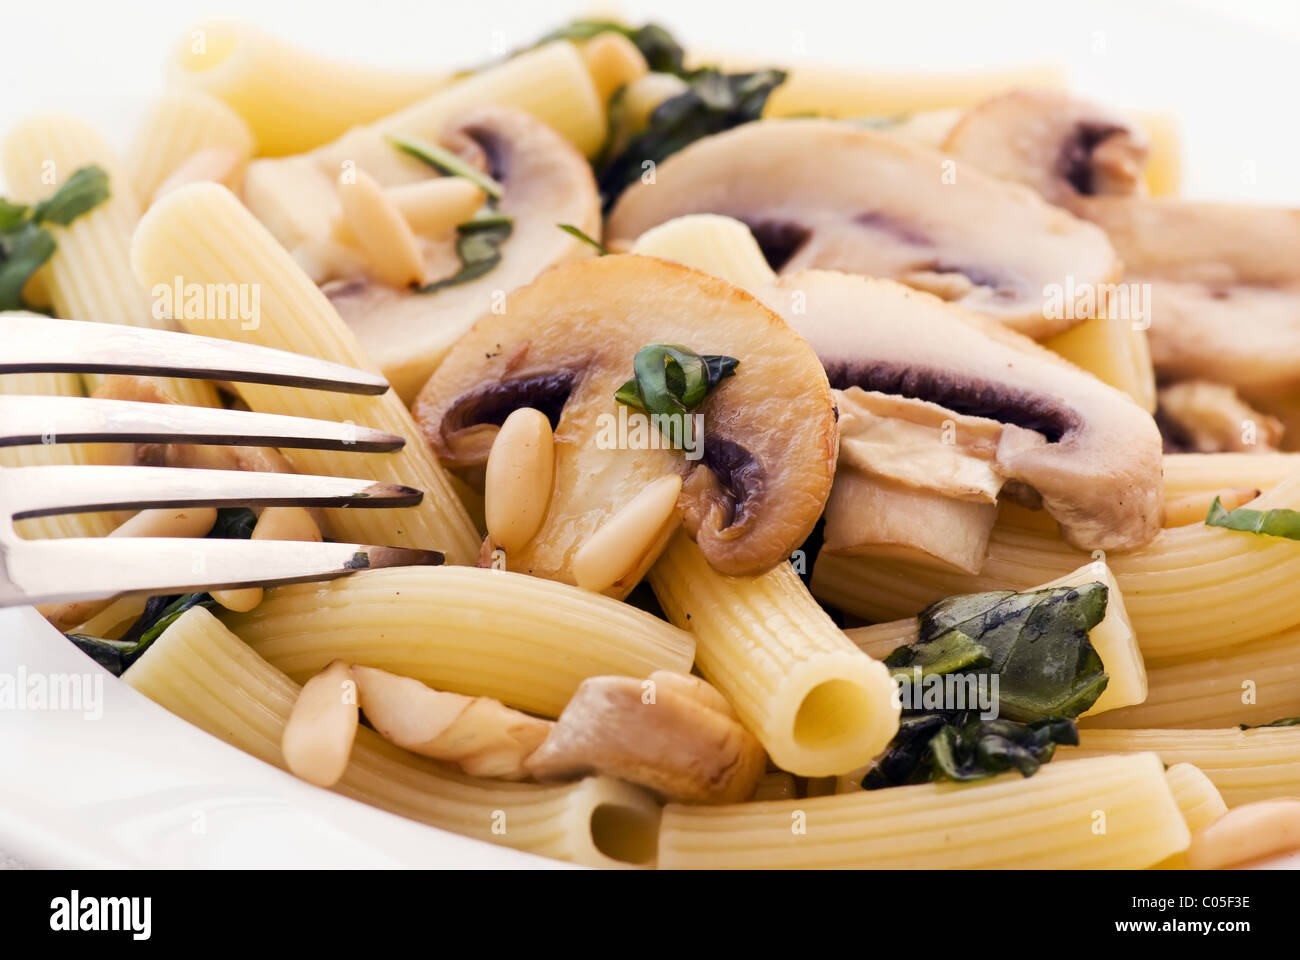 Rigatoni with mushrooms Stock Photo